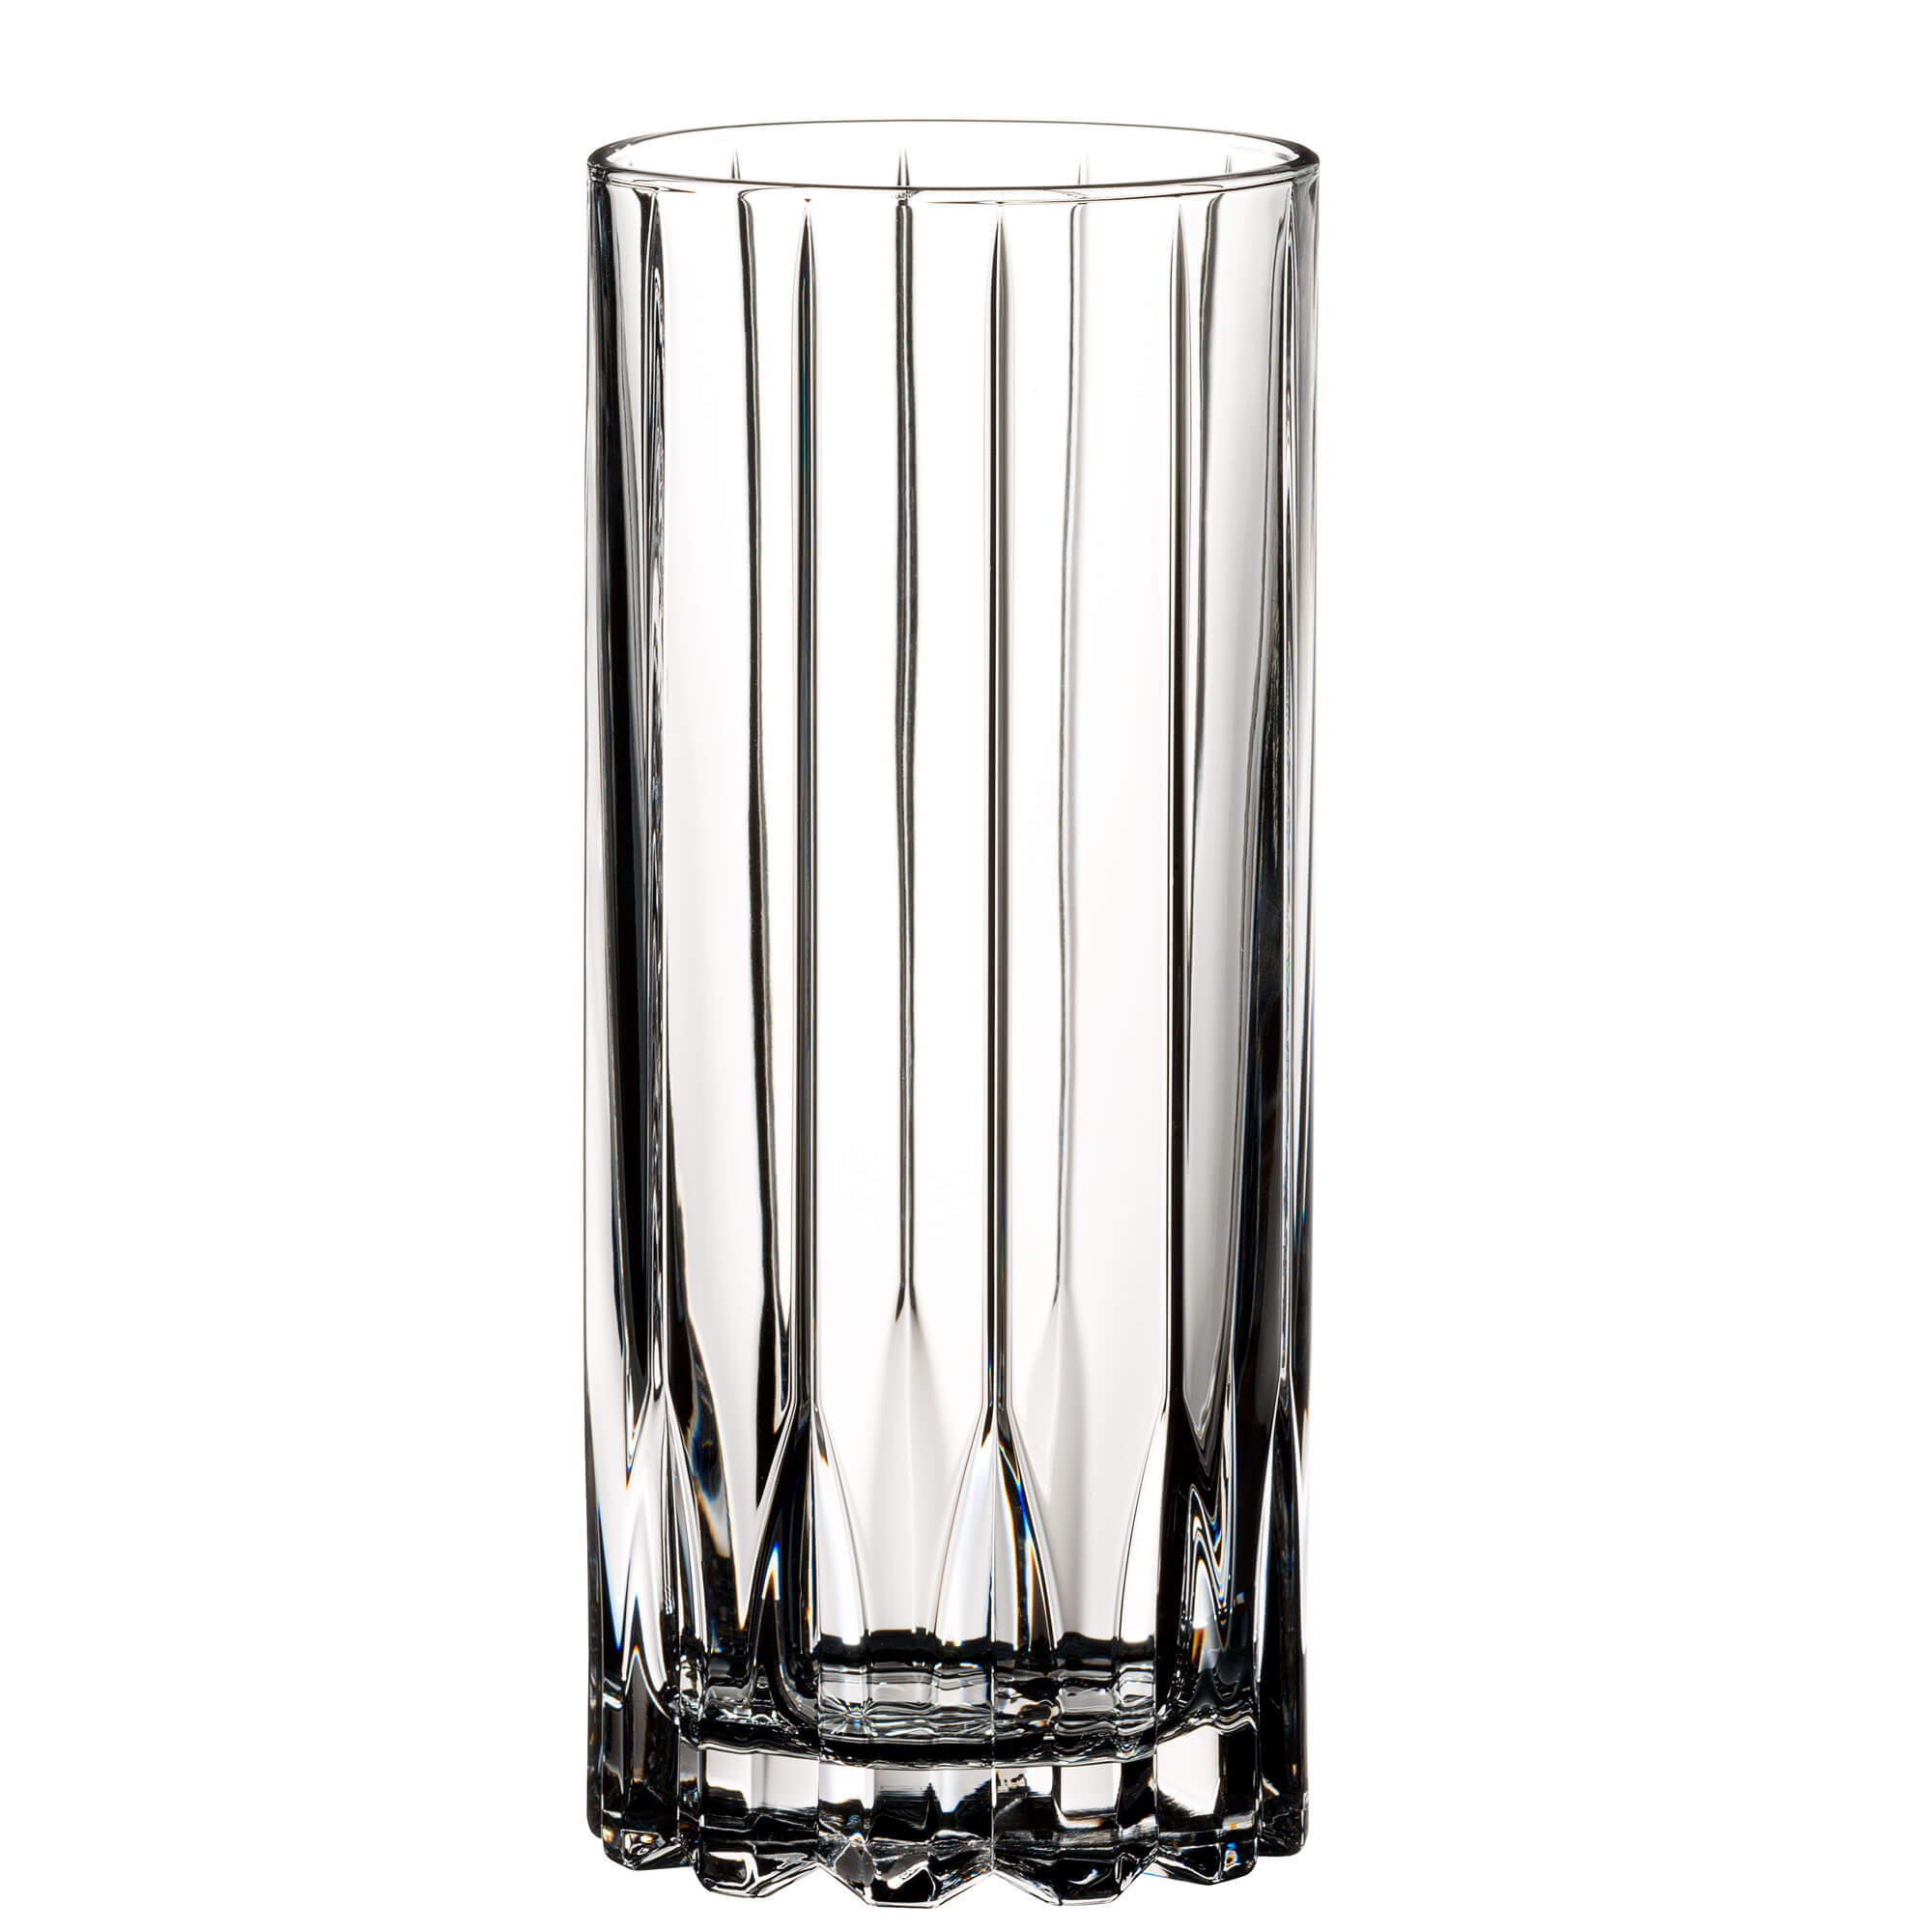 High ball glass Drink Spedific Glassware, Riedel Bar - 310ml (2 pcs.)